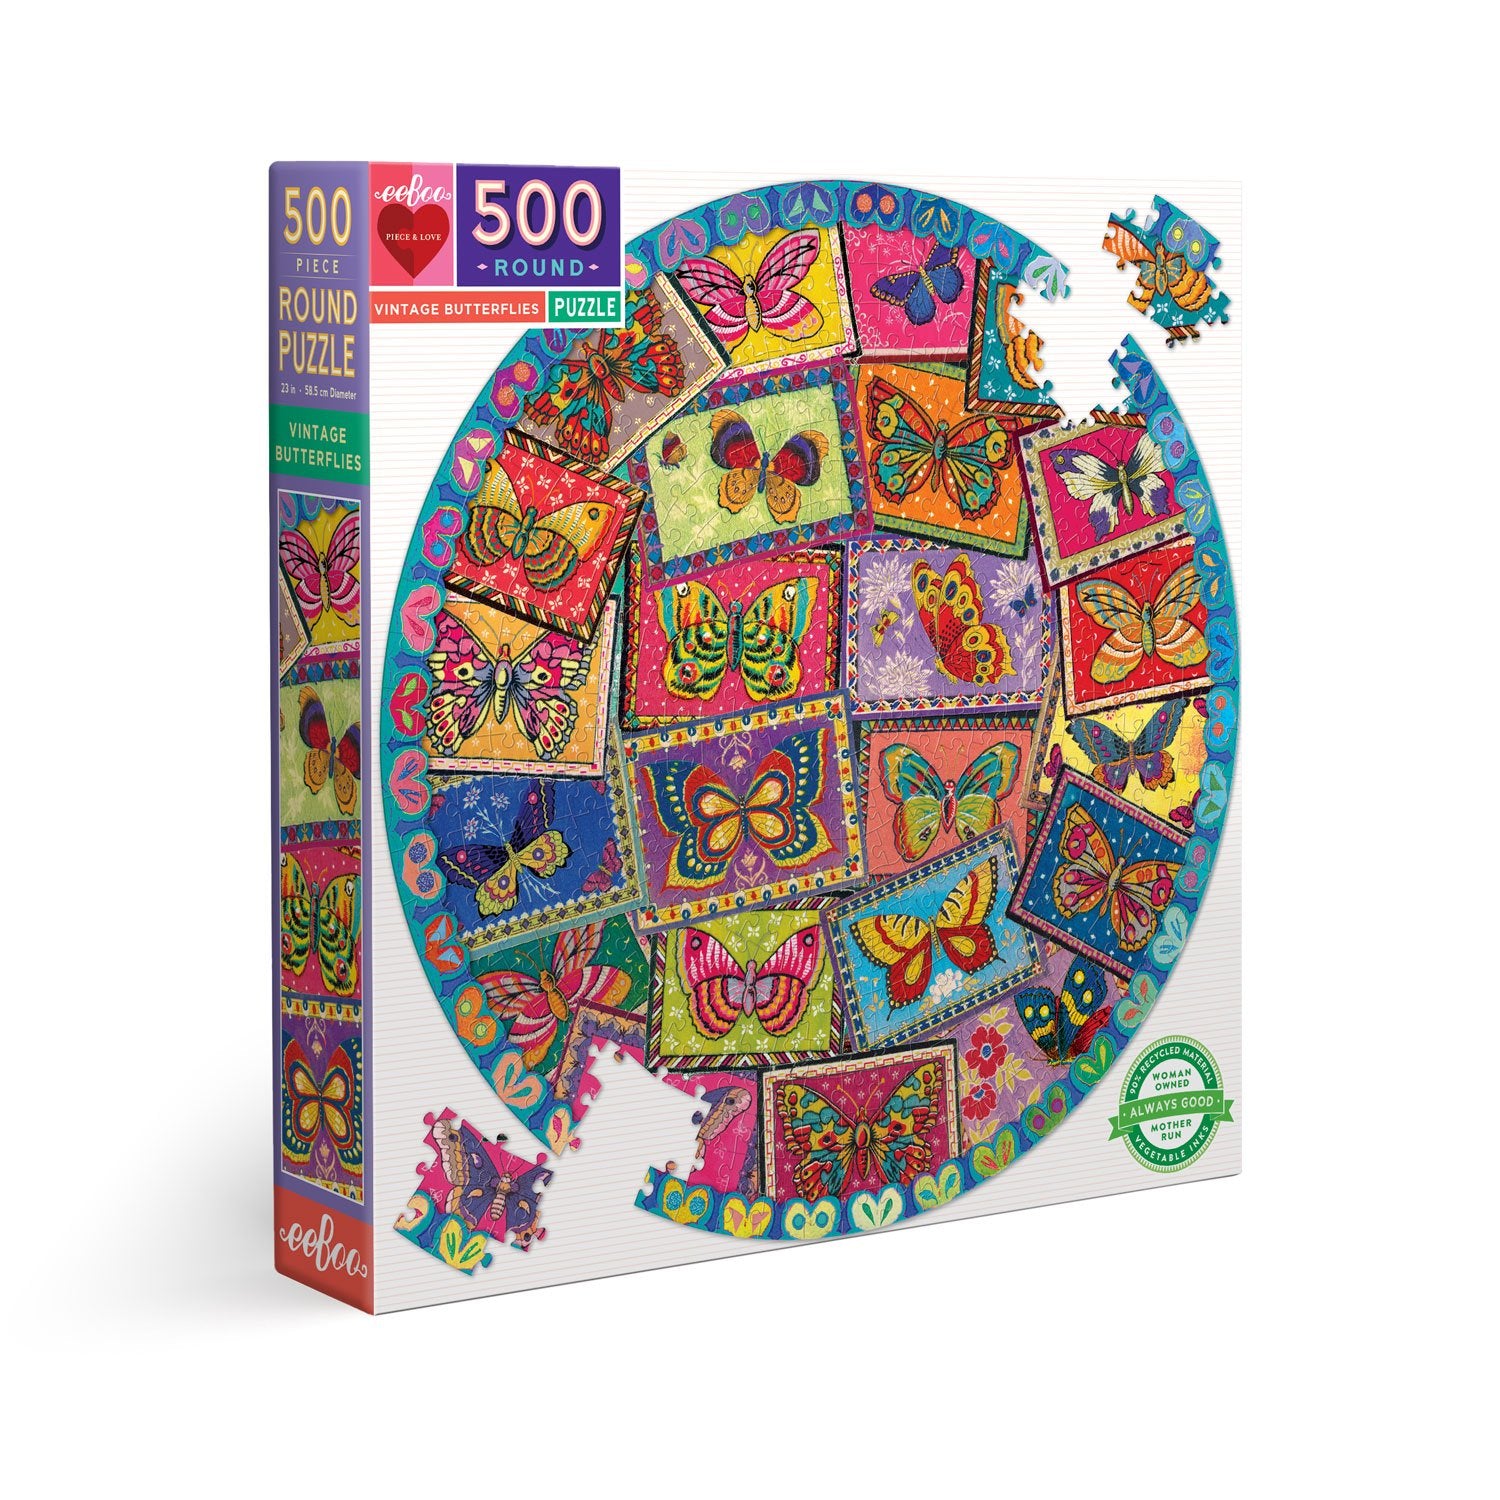 Vintage Butterflies 500 Piece Round Puzzle    